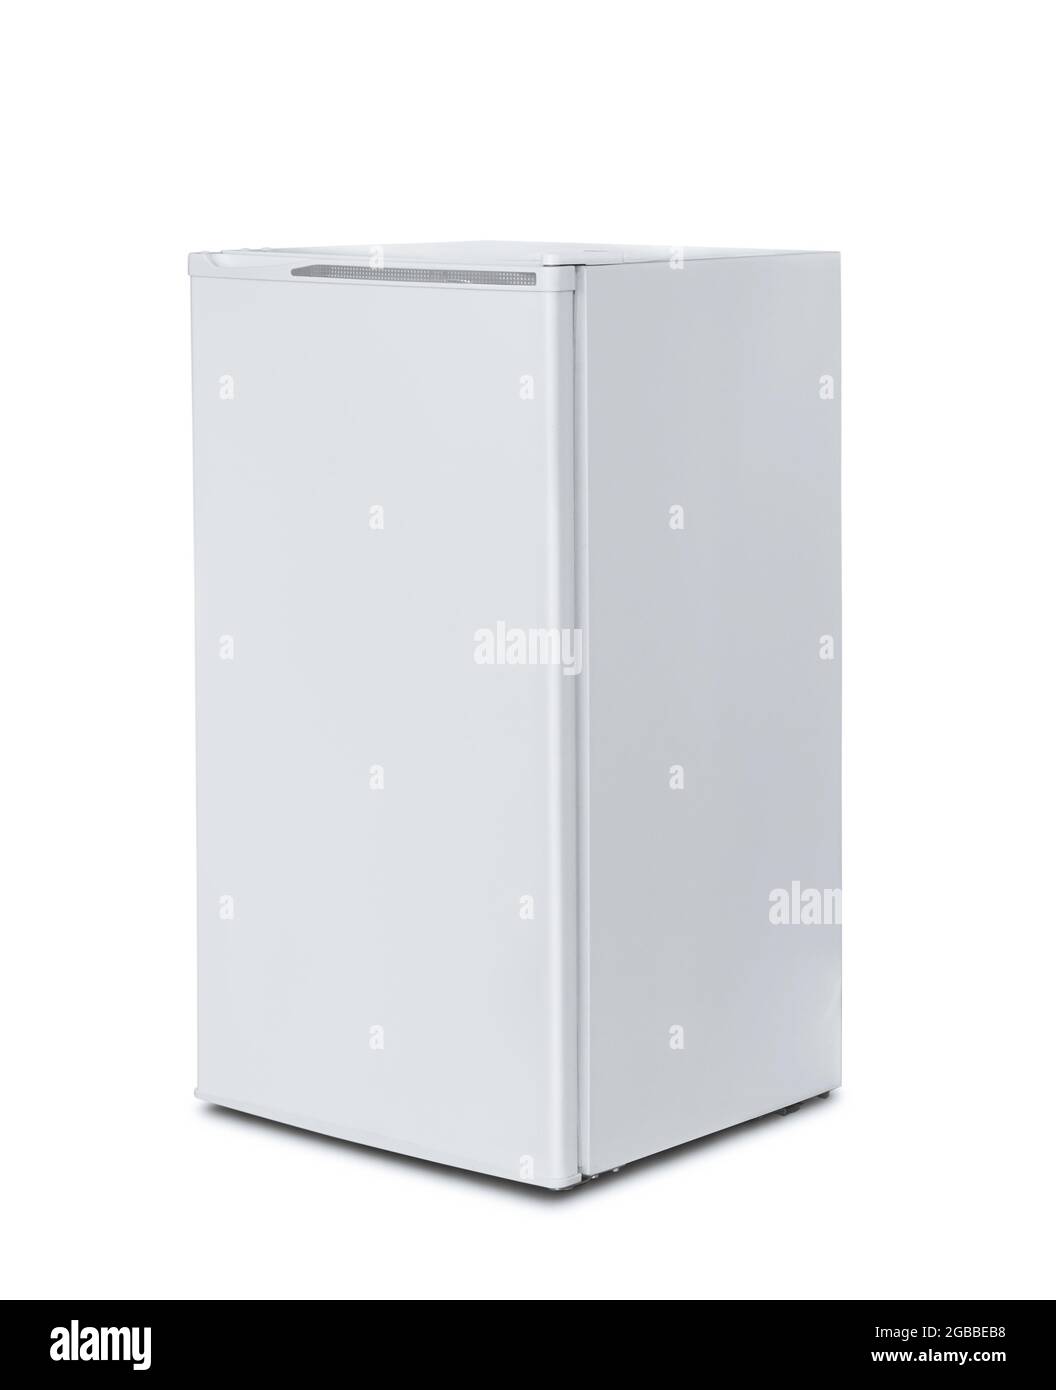 White single door upright refrigerator isolated on white Stock Photo